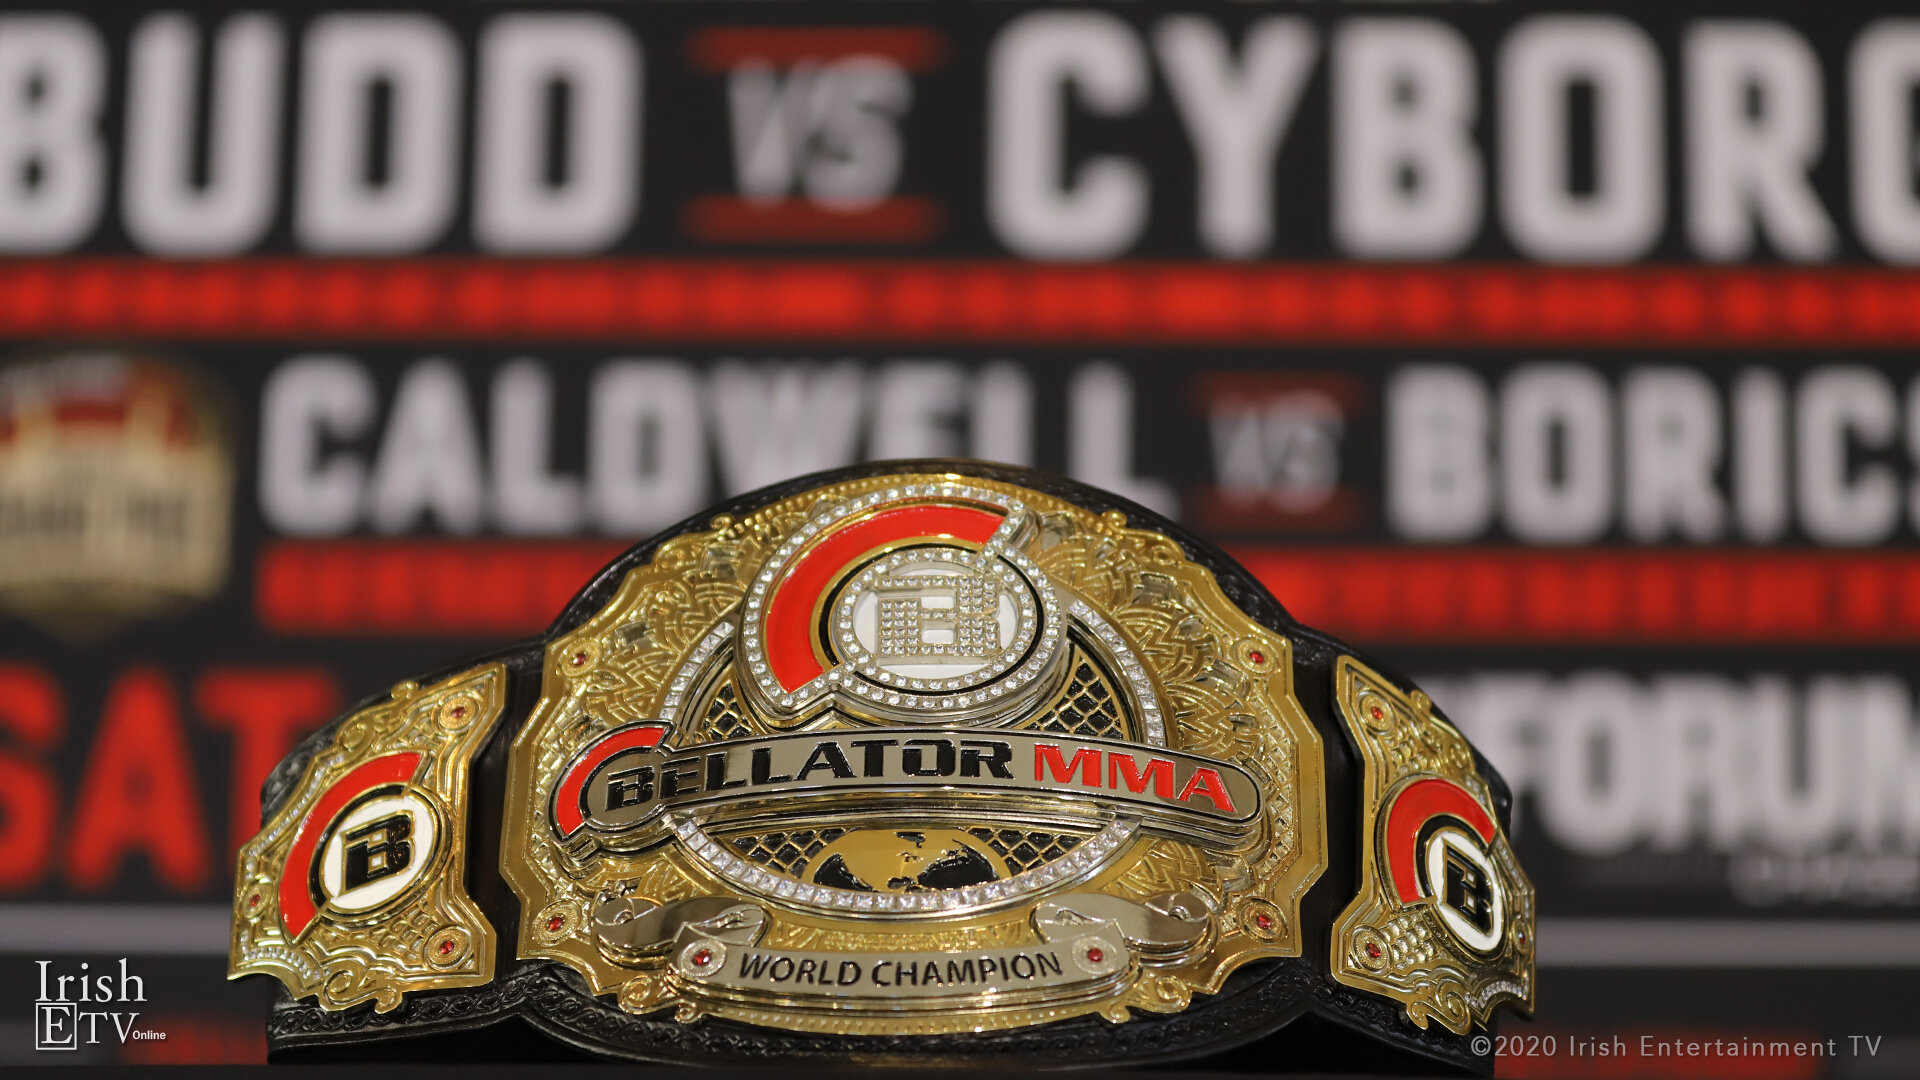 Bellator238 Cris Cyborg vs Julia Budd — Irish Entertainment TV™